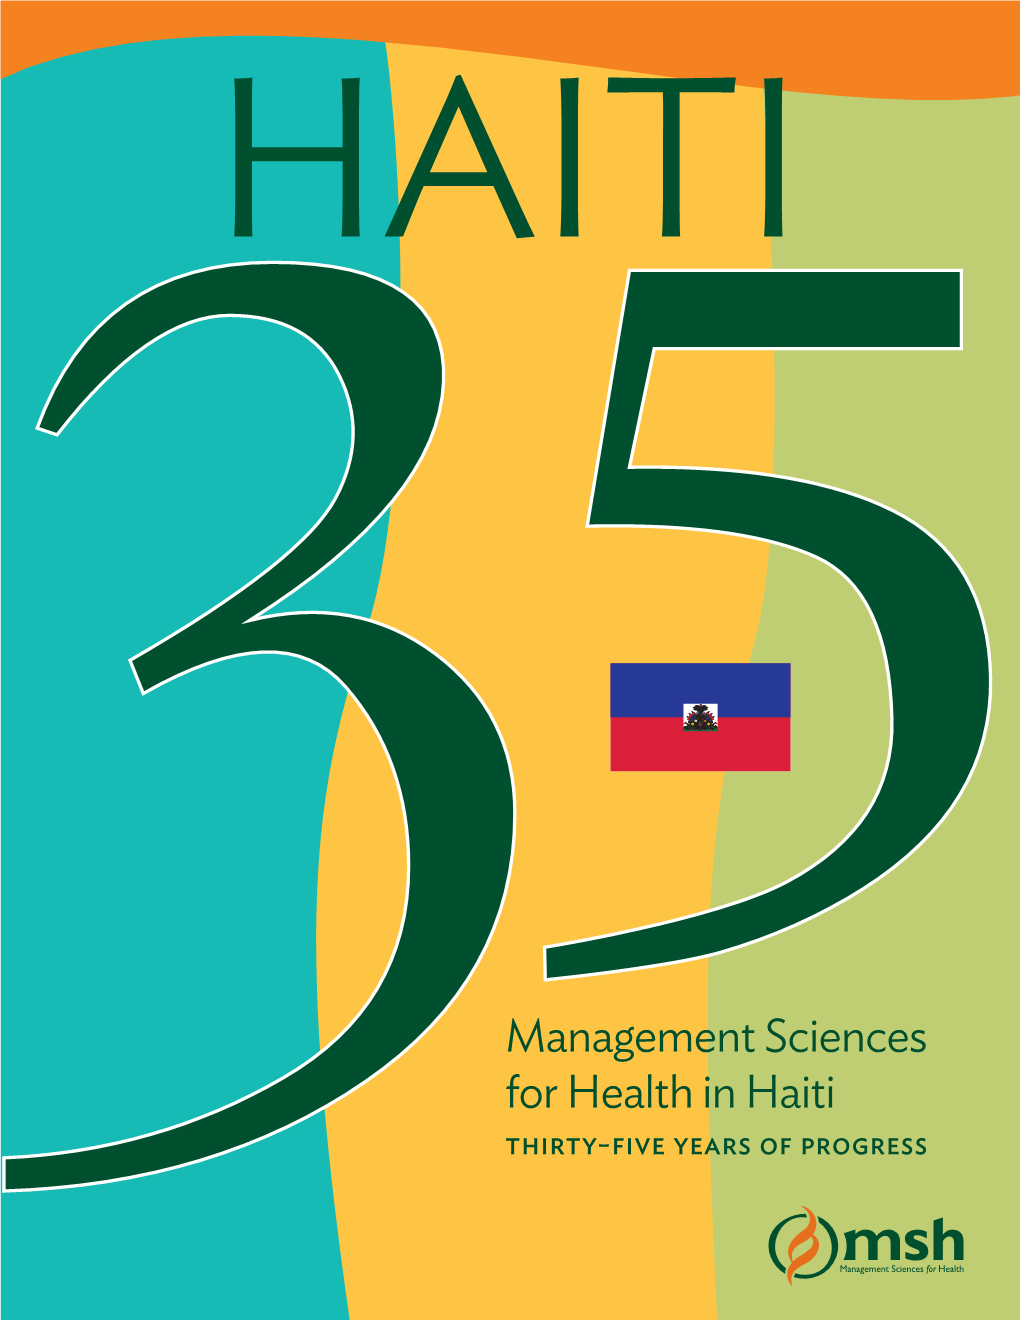 Management Sciences for Health in Haiti